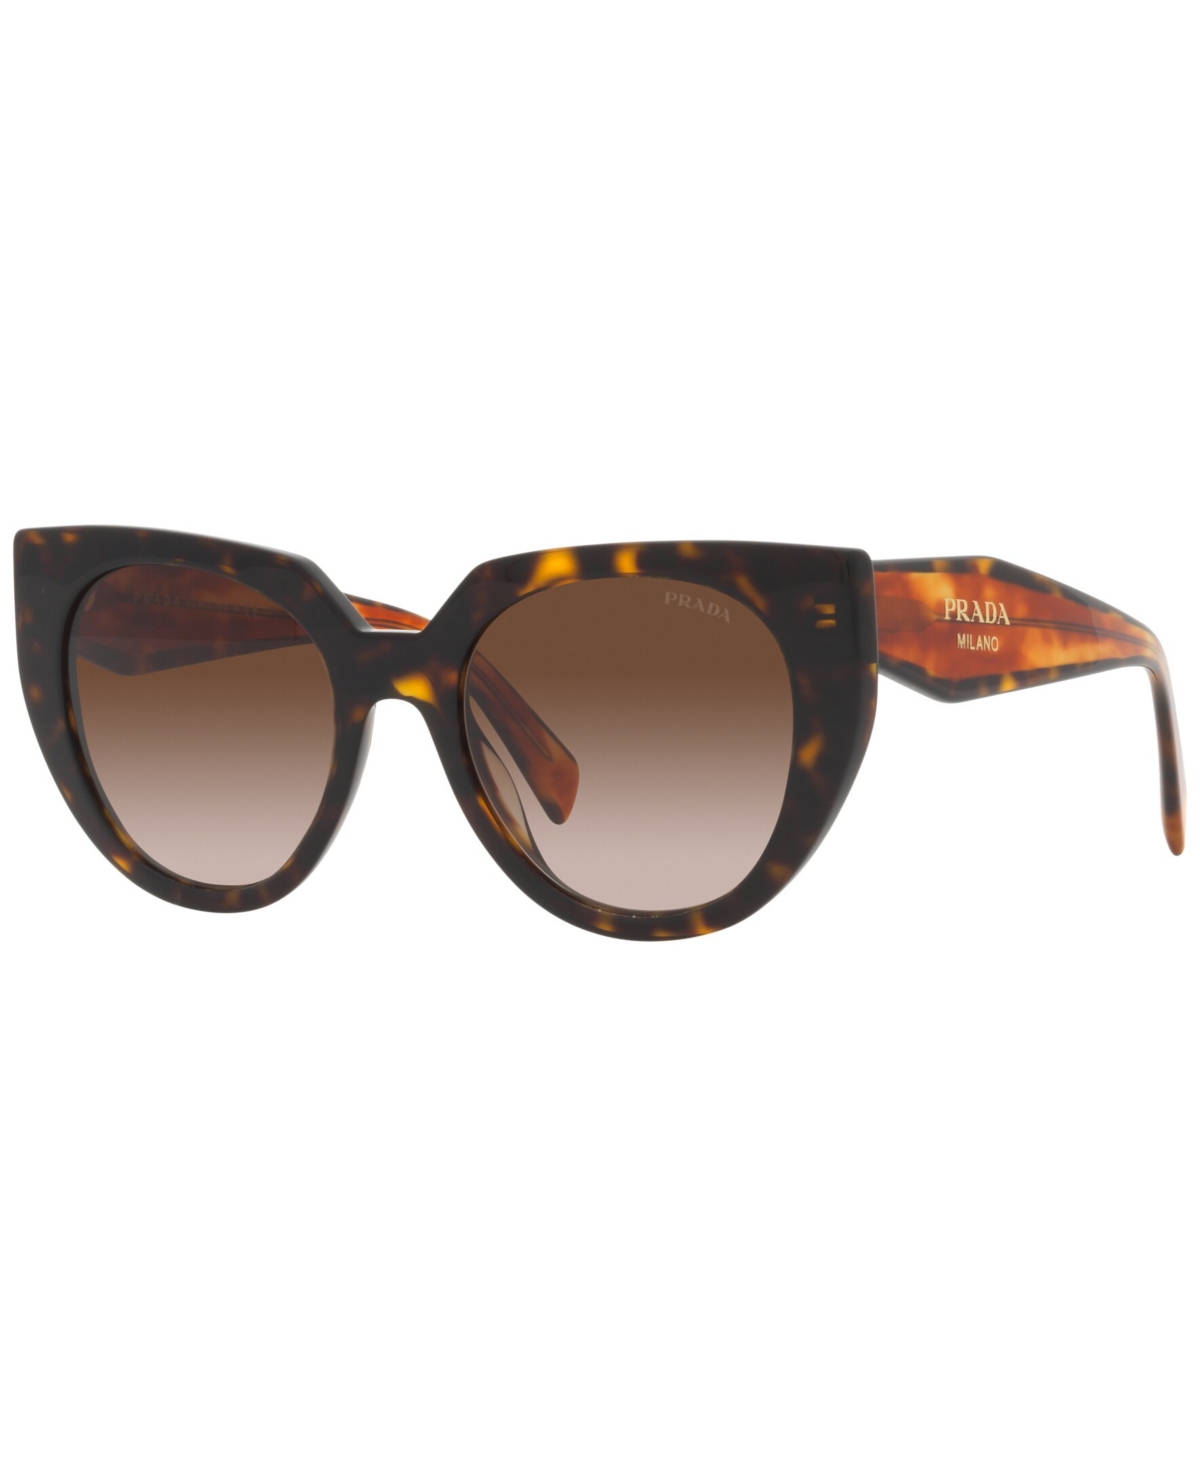 Prada Women's Sunglasses, Pr 14ws In Tortoise